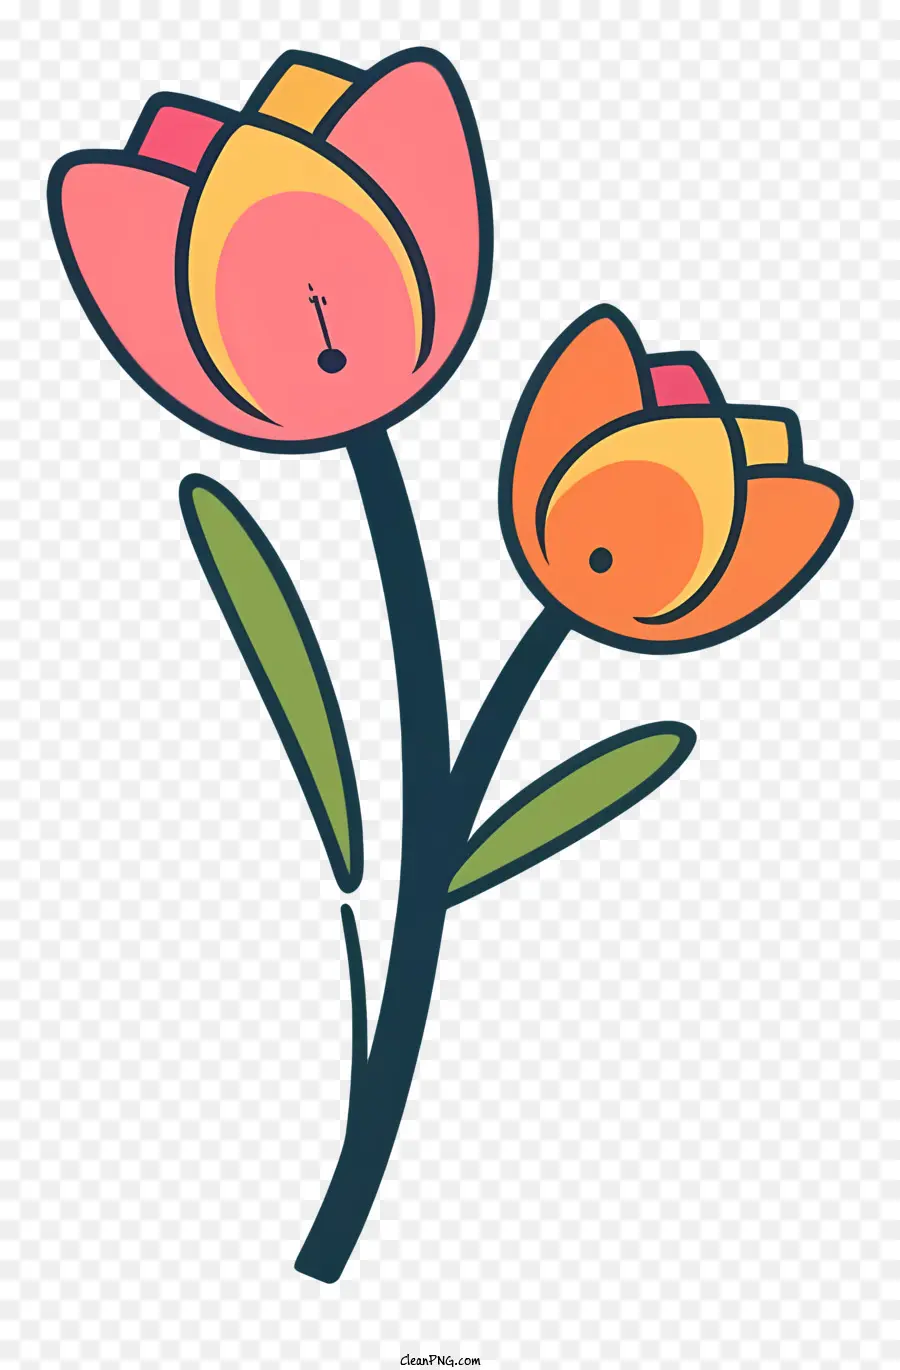 pink tulip orange petals green stem black background flat style